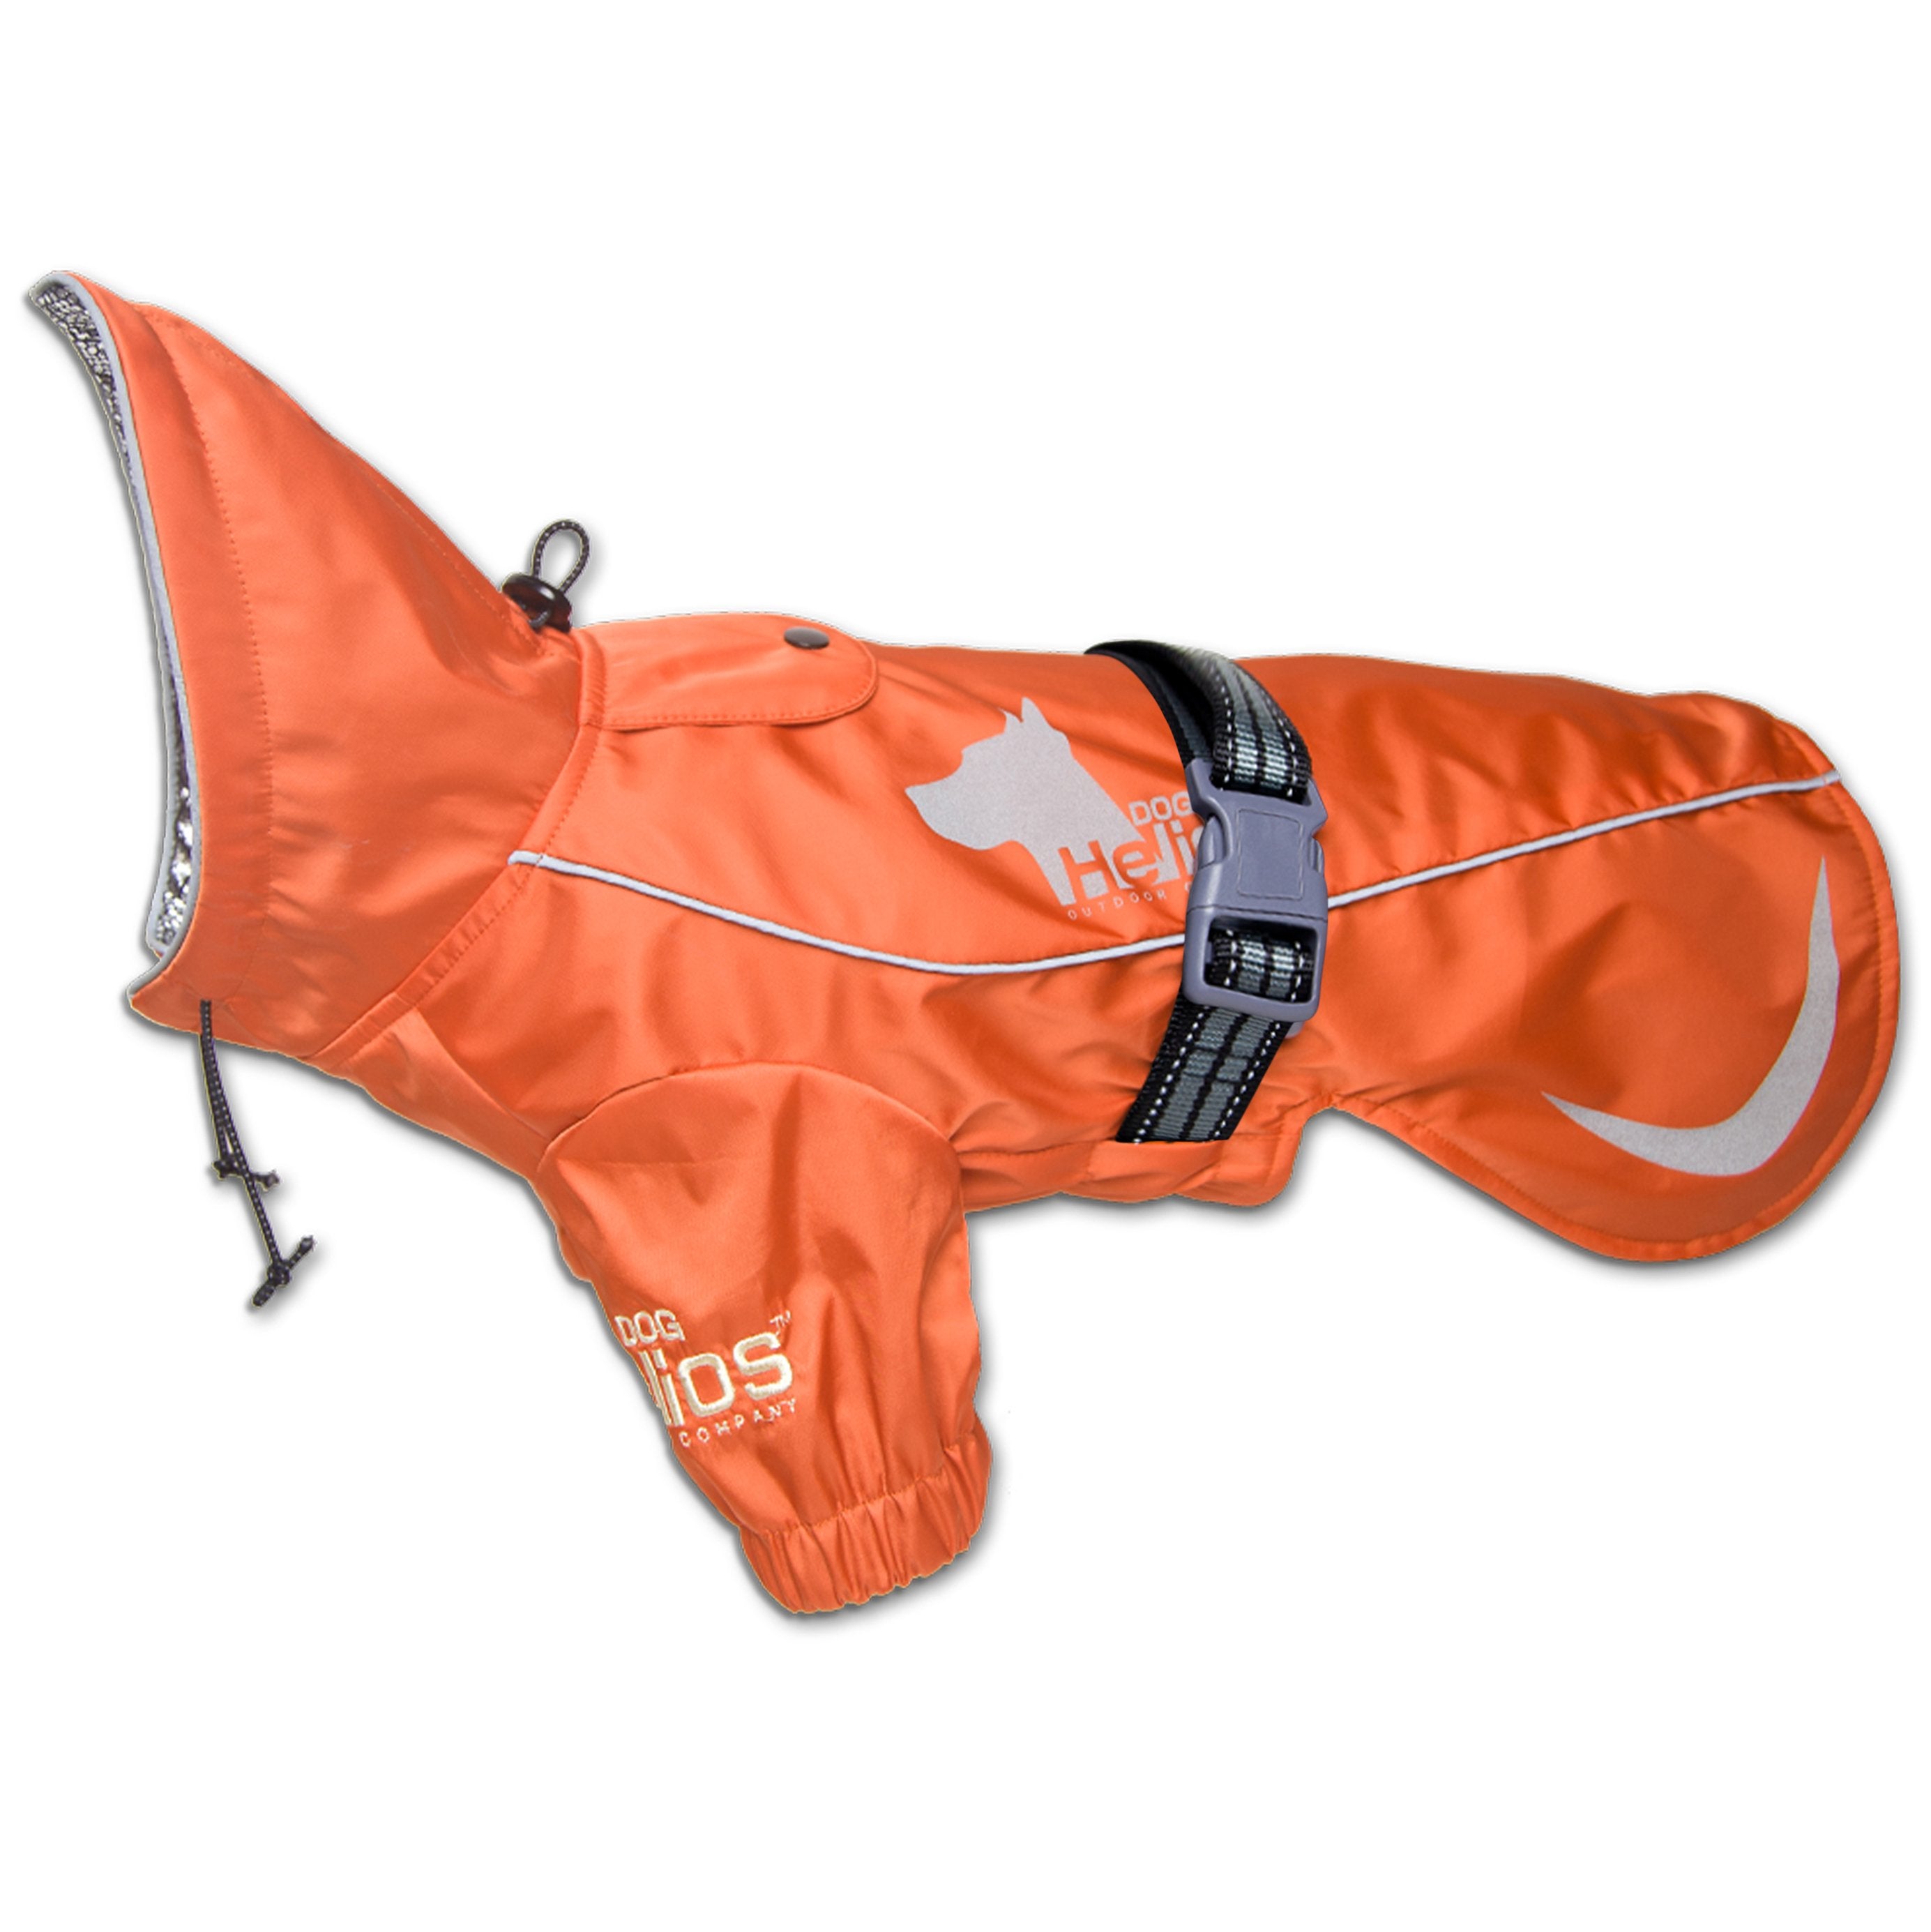 Dog Helios® 'Ice-Breaker' Hooded Dog Coat W/ Heat Reflective Tech - Orange - Small